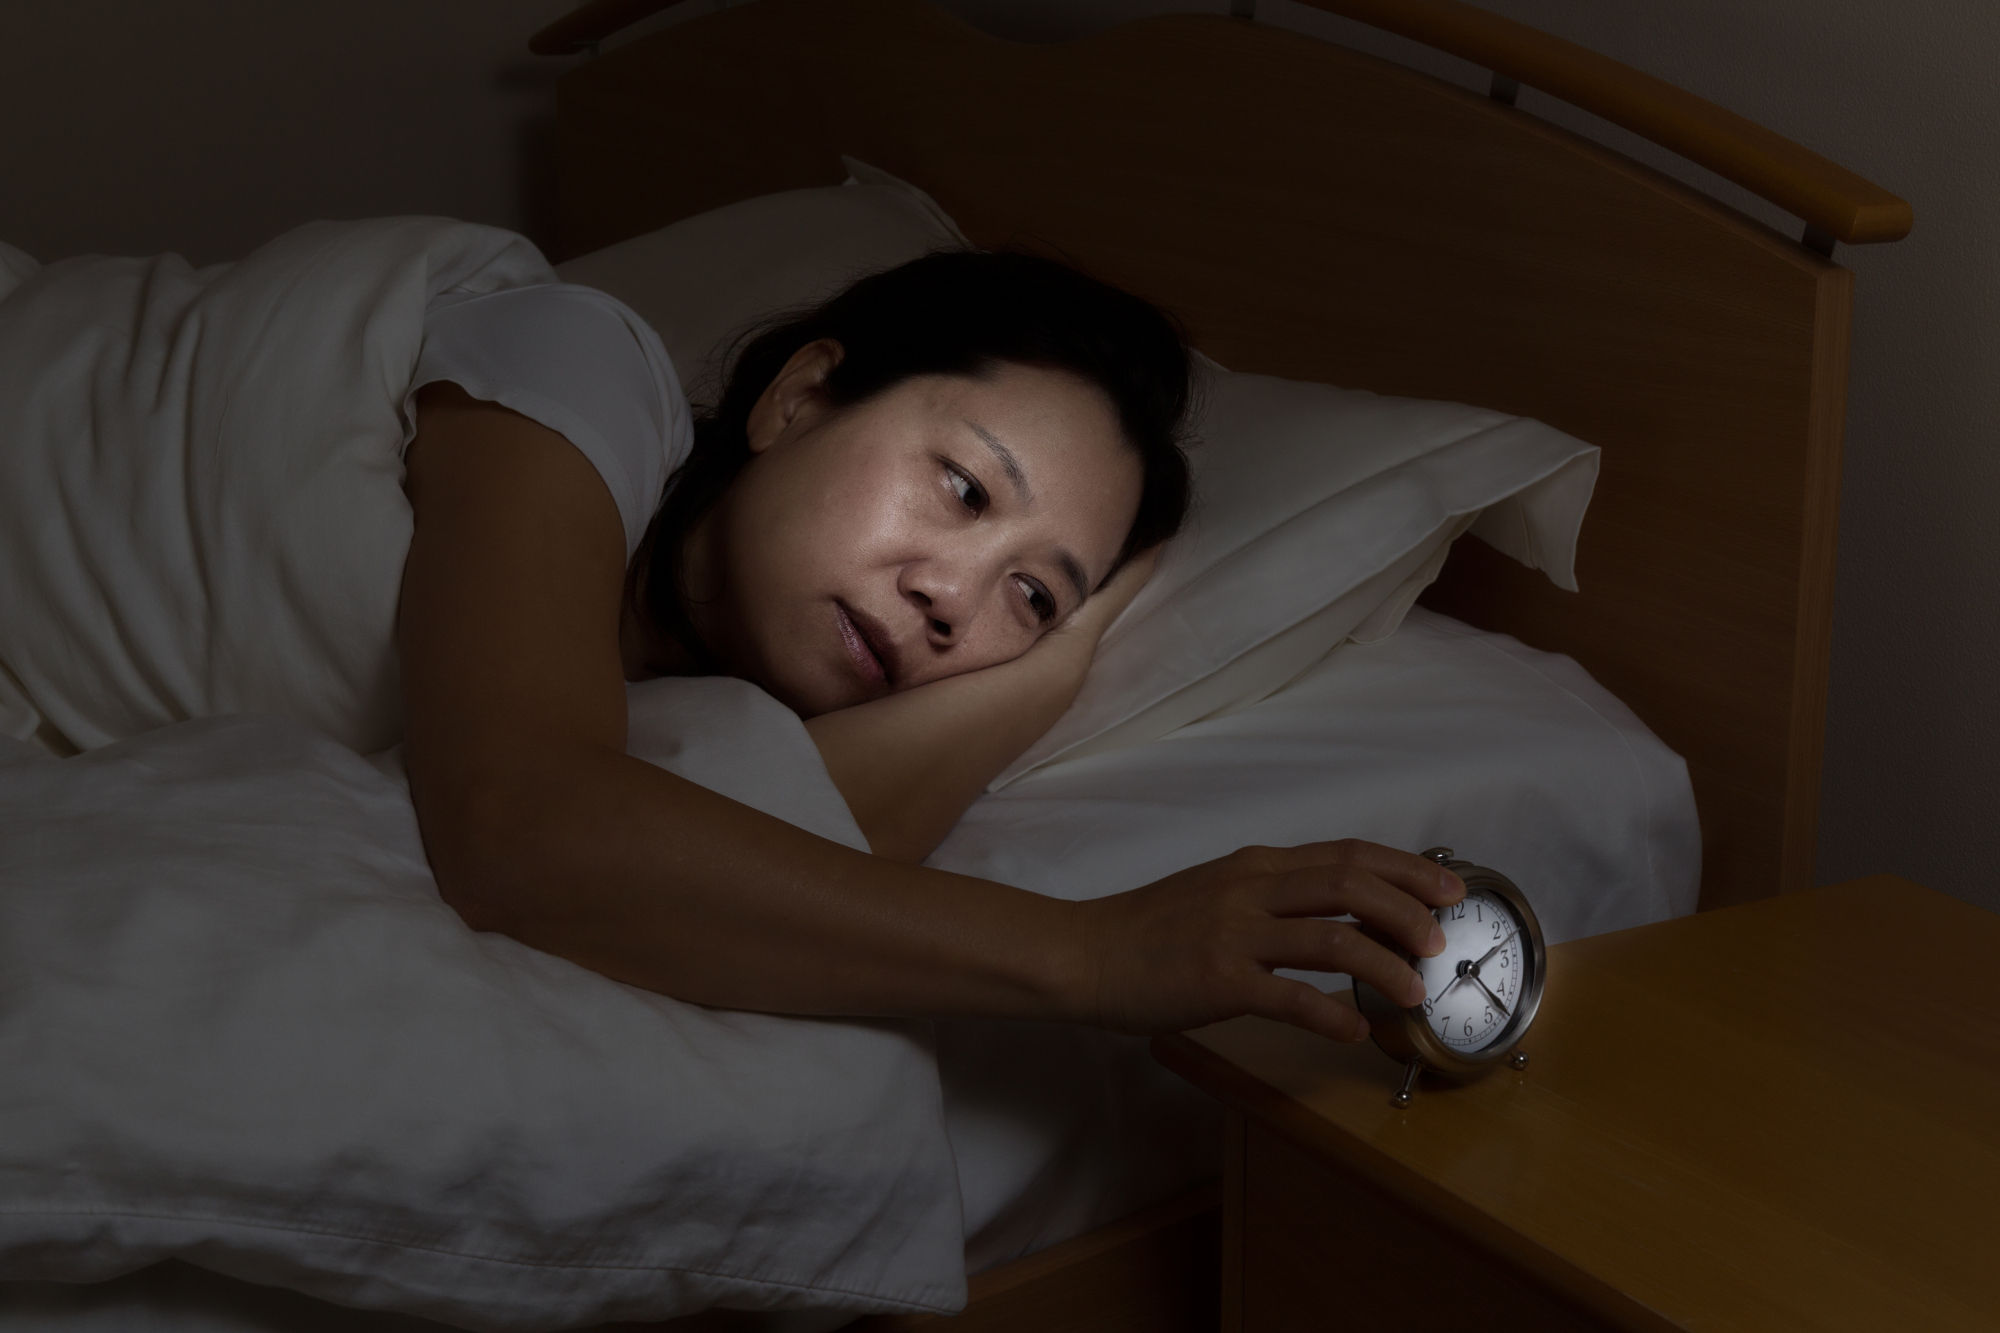 Penyebab insomnia pada wanita